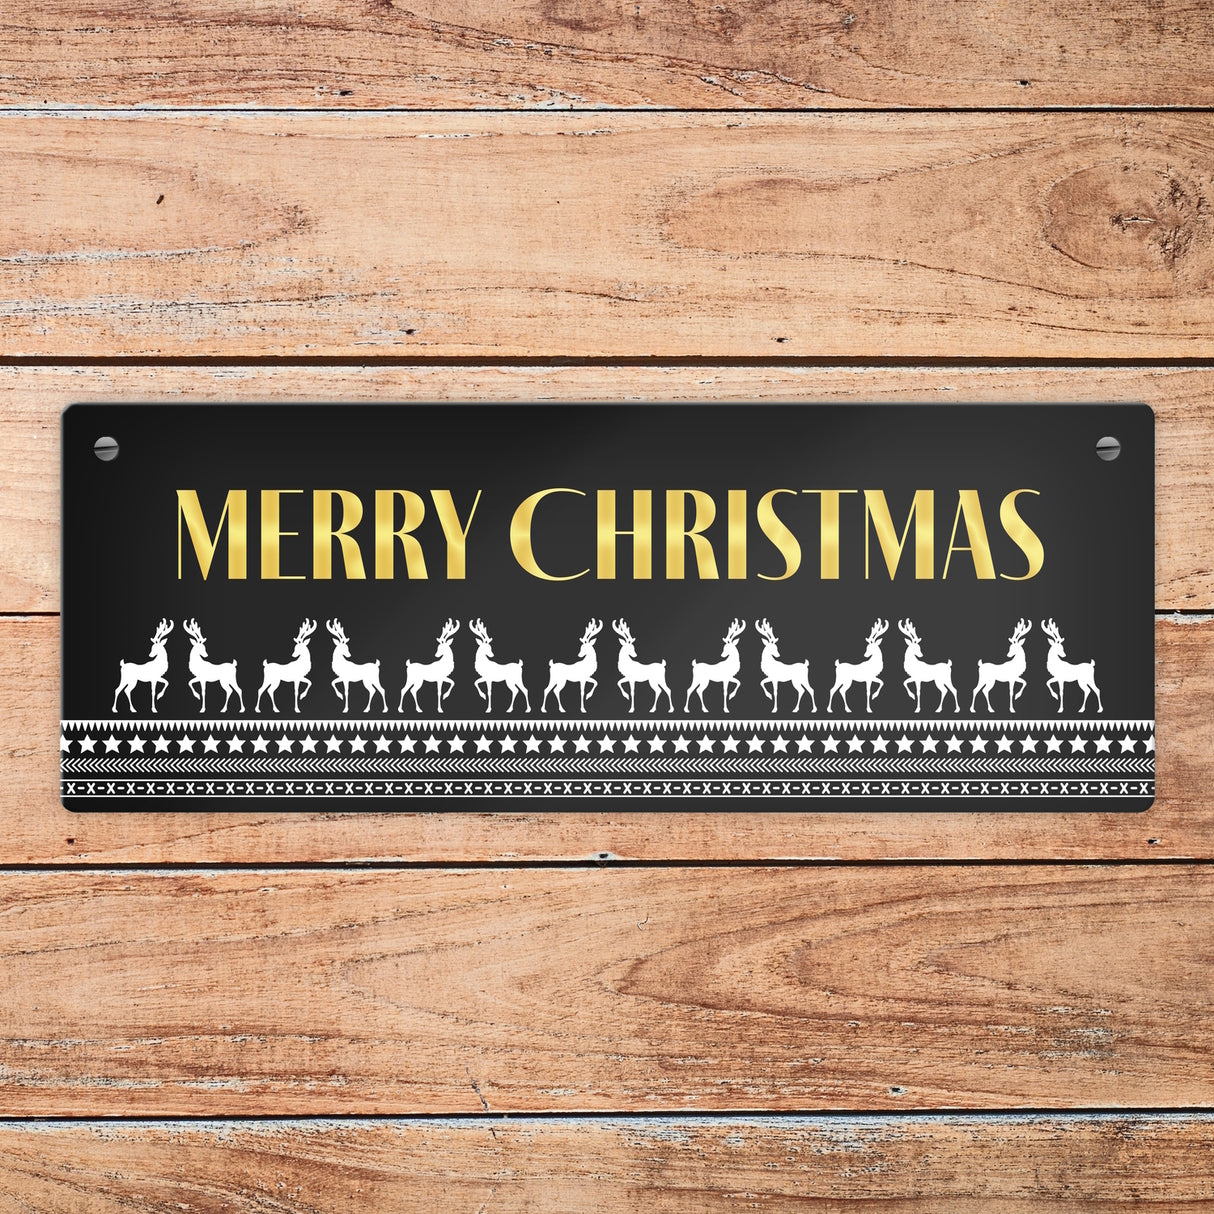 Merry Christmas Metallschild mit edlem Weihnachtsmuster Motiv